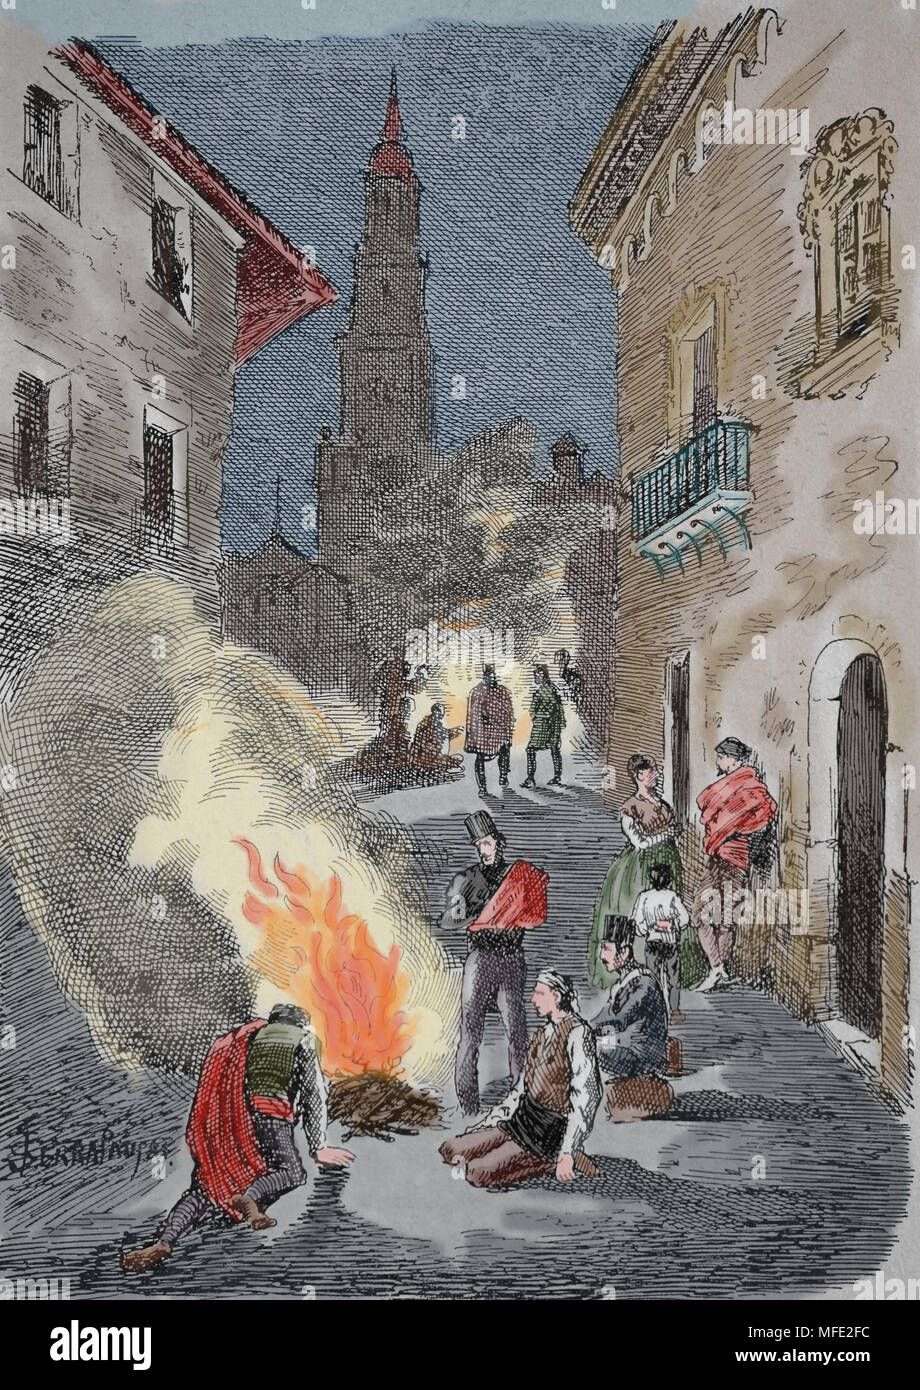 First Siege of Zaragoza. Peninsular War (1807-1814). City street during the site. Engraving, 19th century. Stock Photo